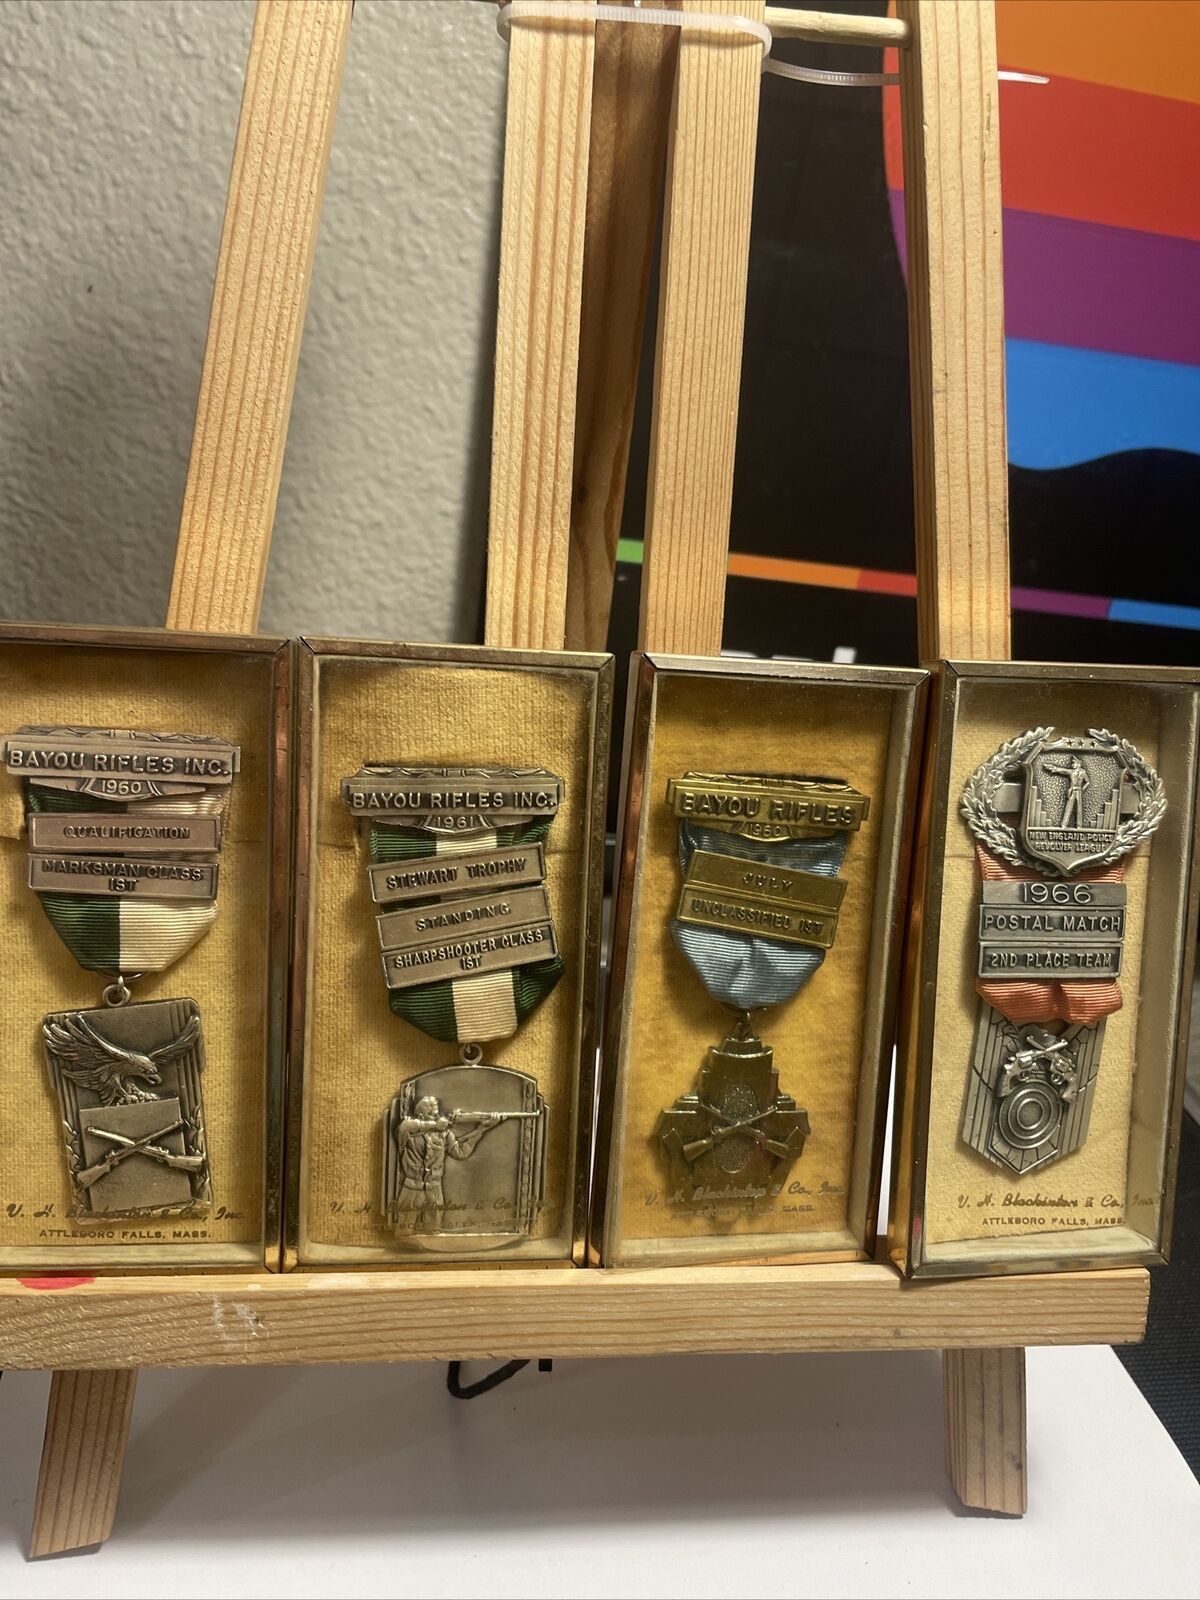 1960s Police Medals - Bayou Rifles/New England Police Revolver League Badges